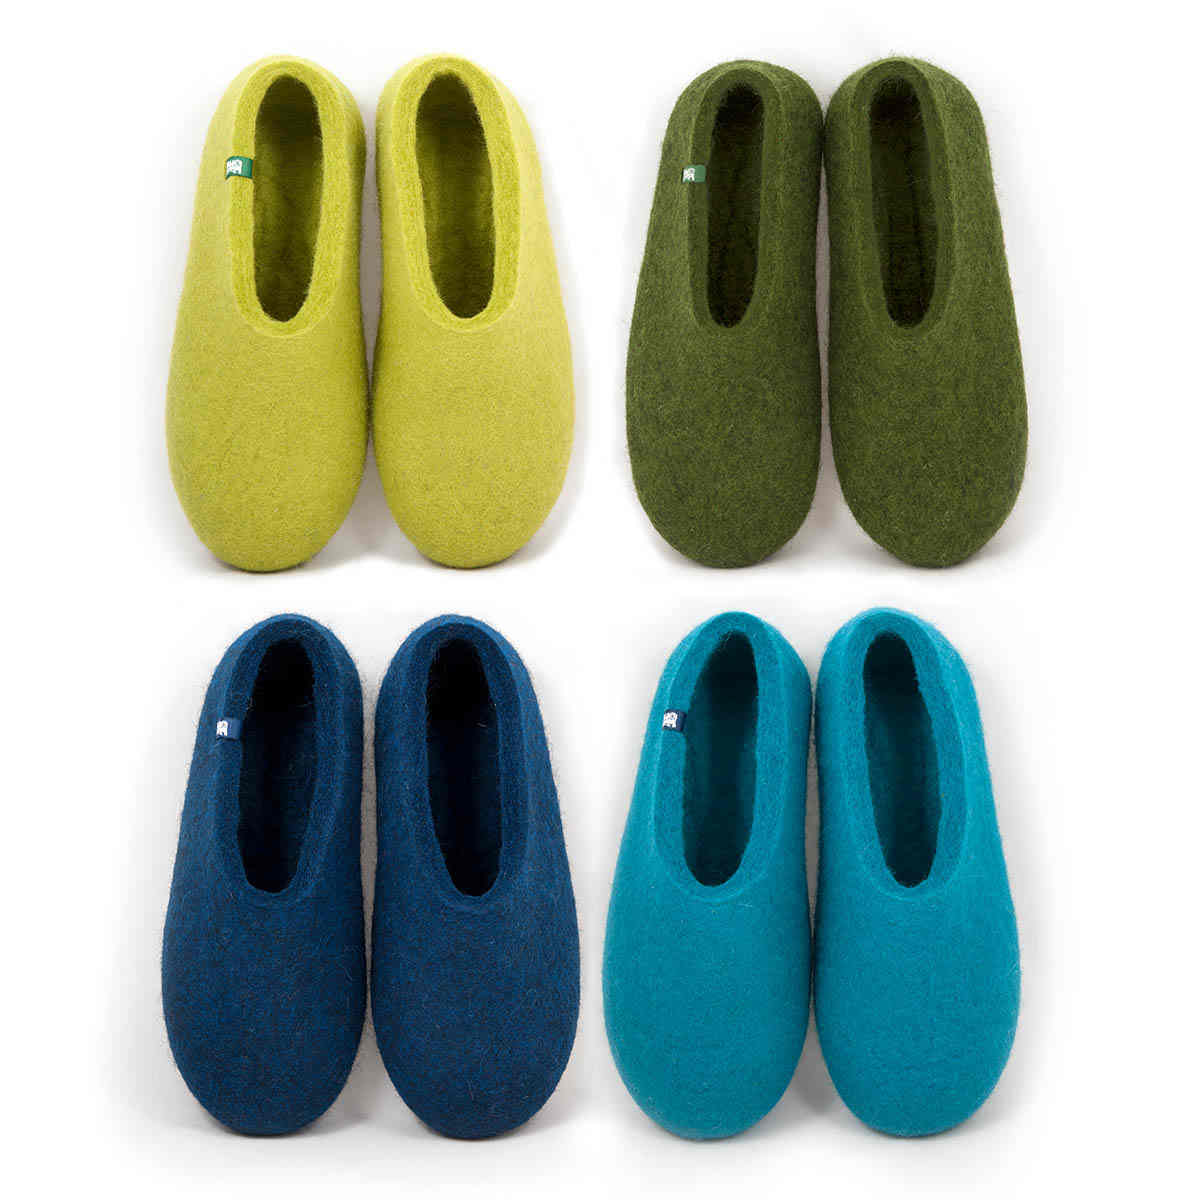 Pure wool slippers blue / green BASIC Home, Women's Slippers, BASIC